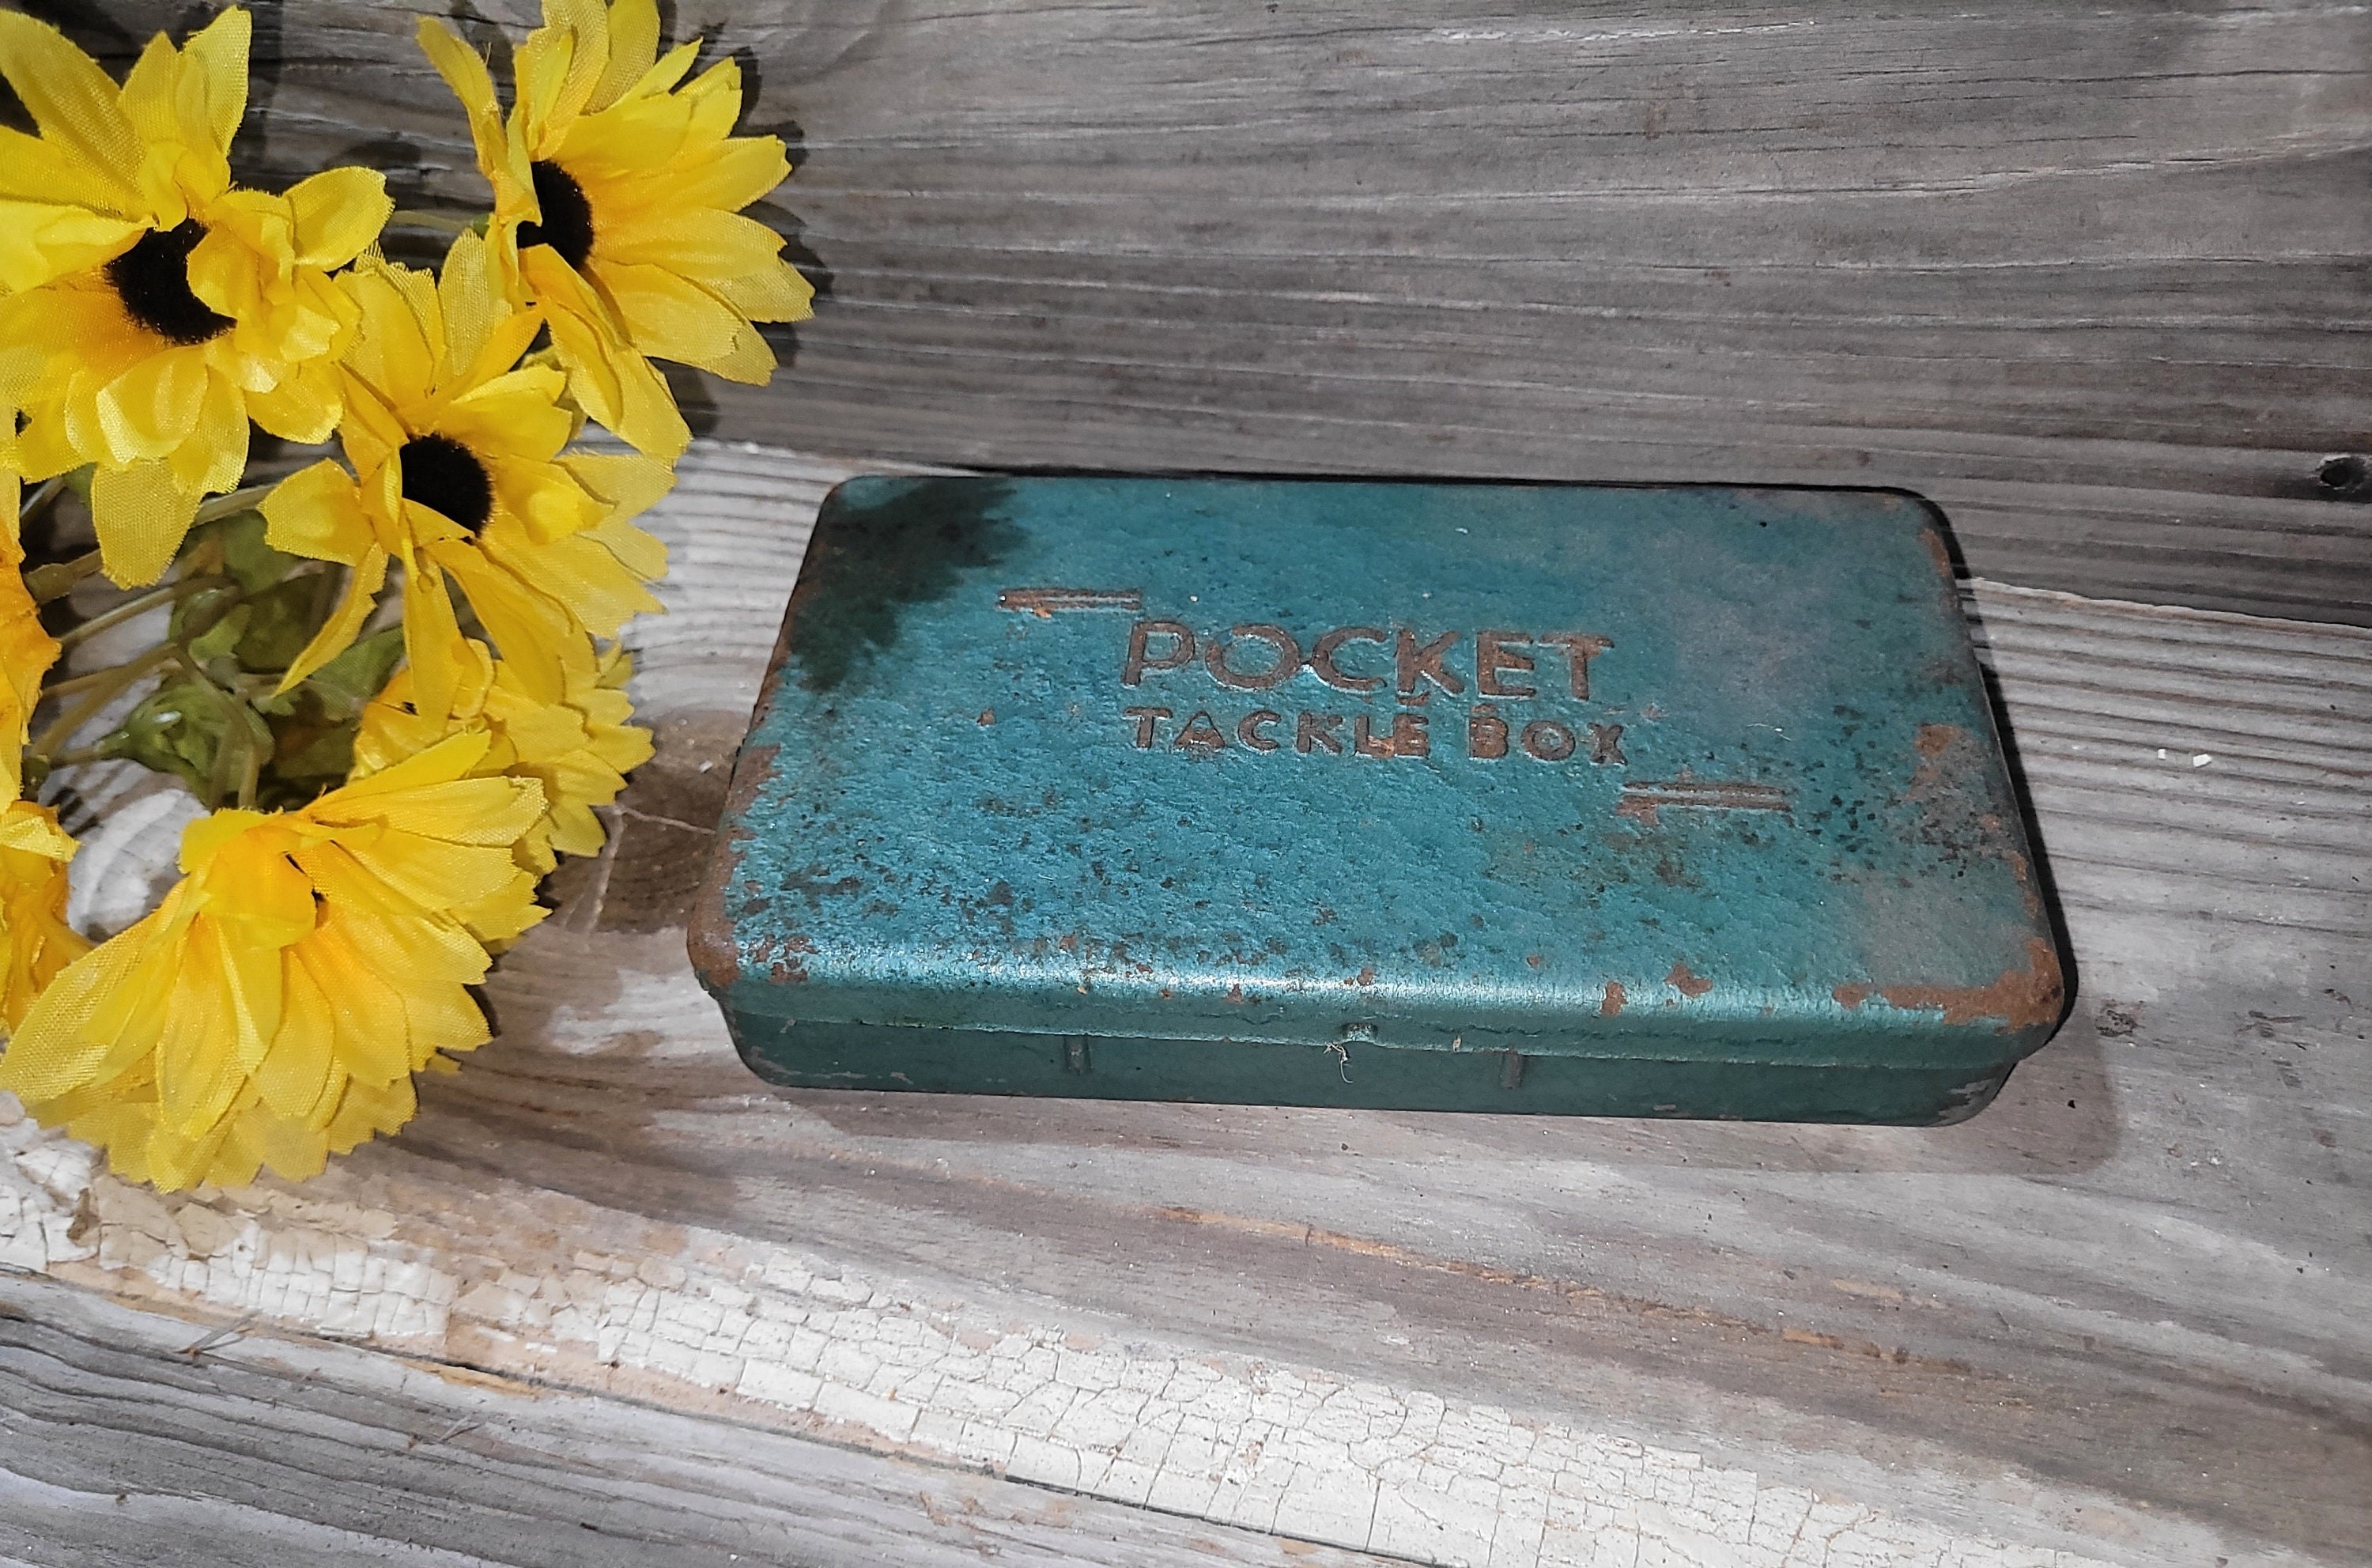 Very Old Rusty Pocket Tackle Box | Vintage Teal Fisherman Pocket Tackle Box